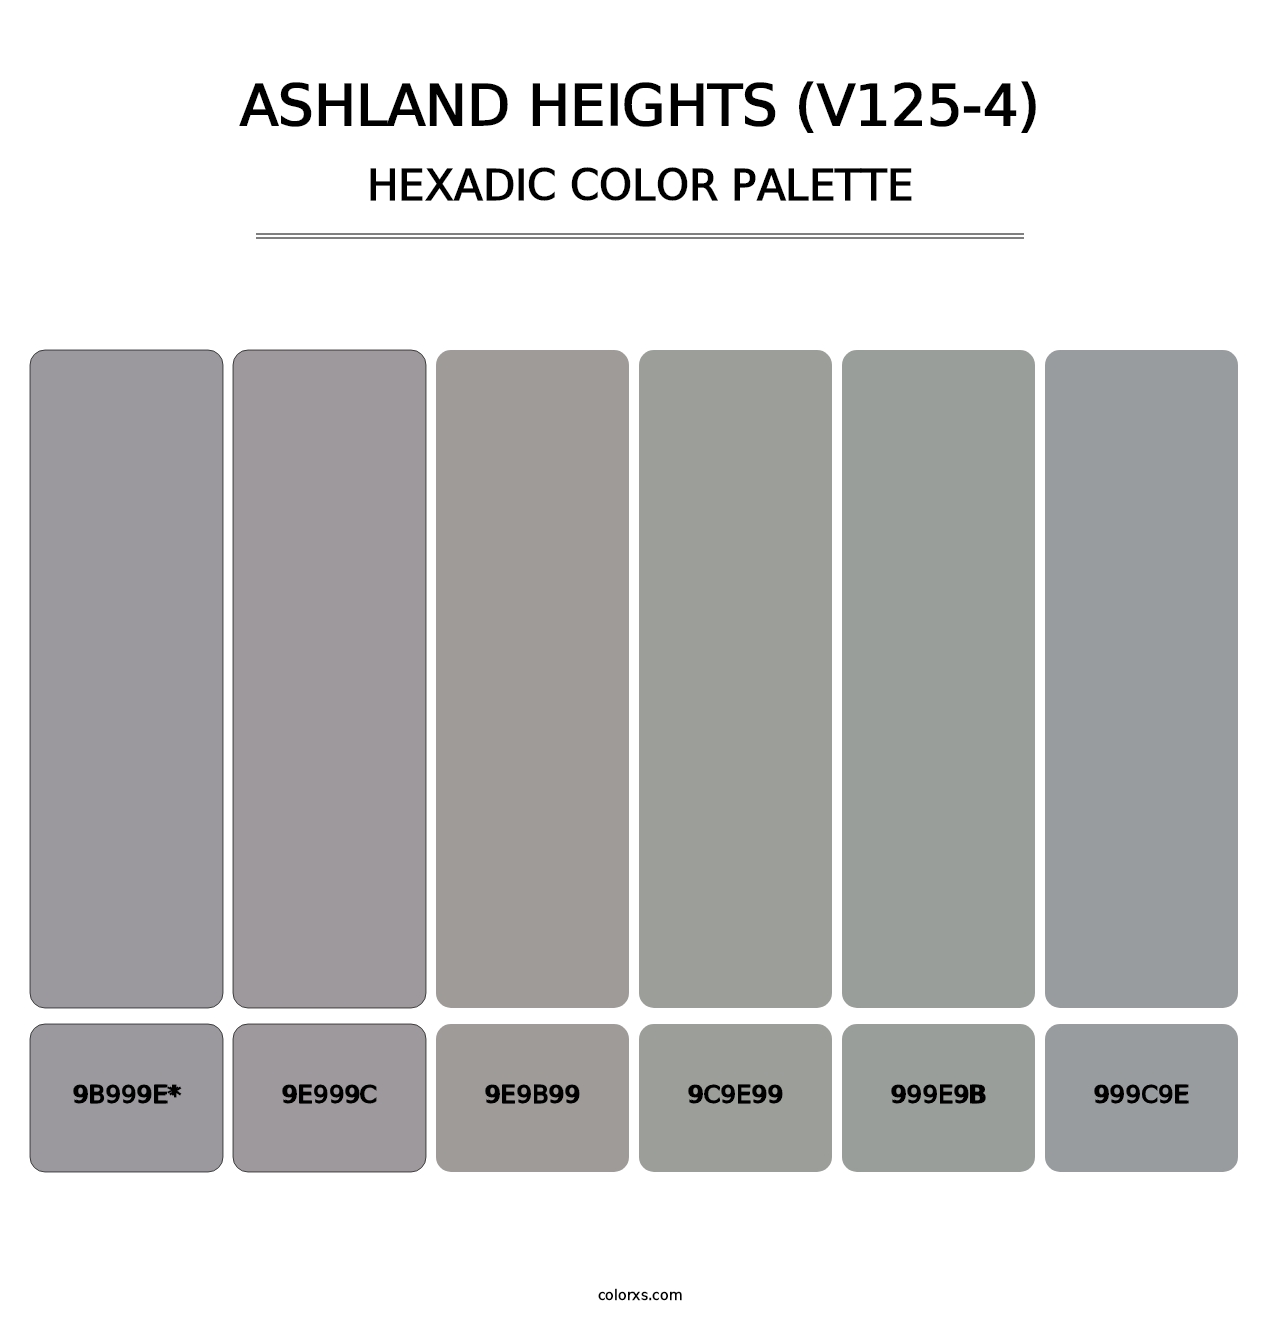 Ashland Heights (V125-4) - Hexadic Color Palette